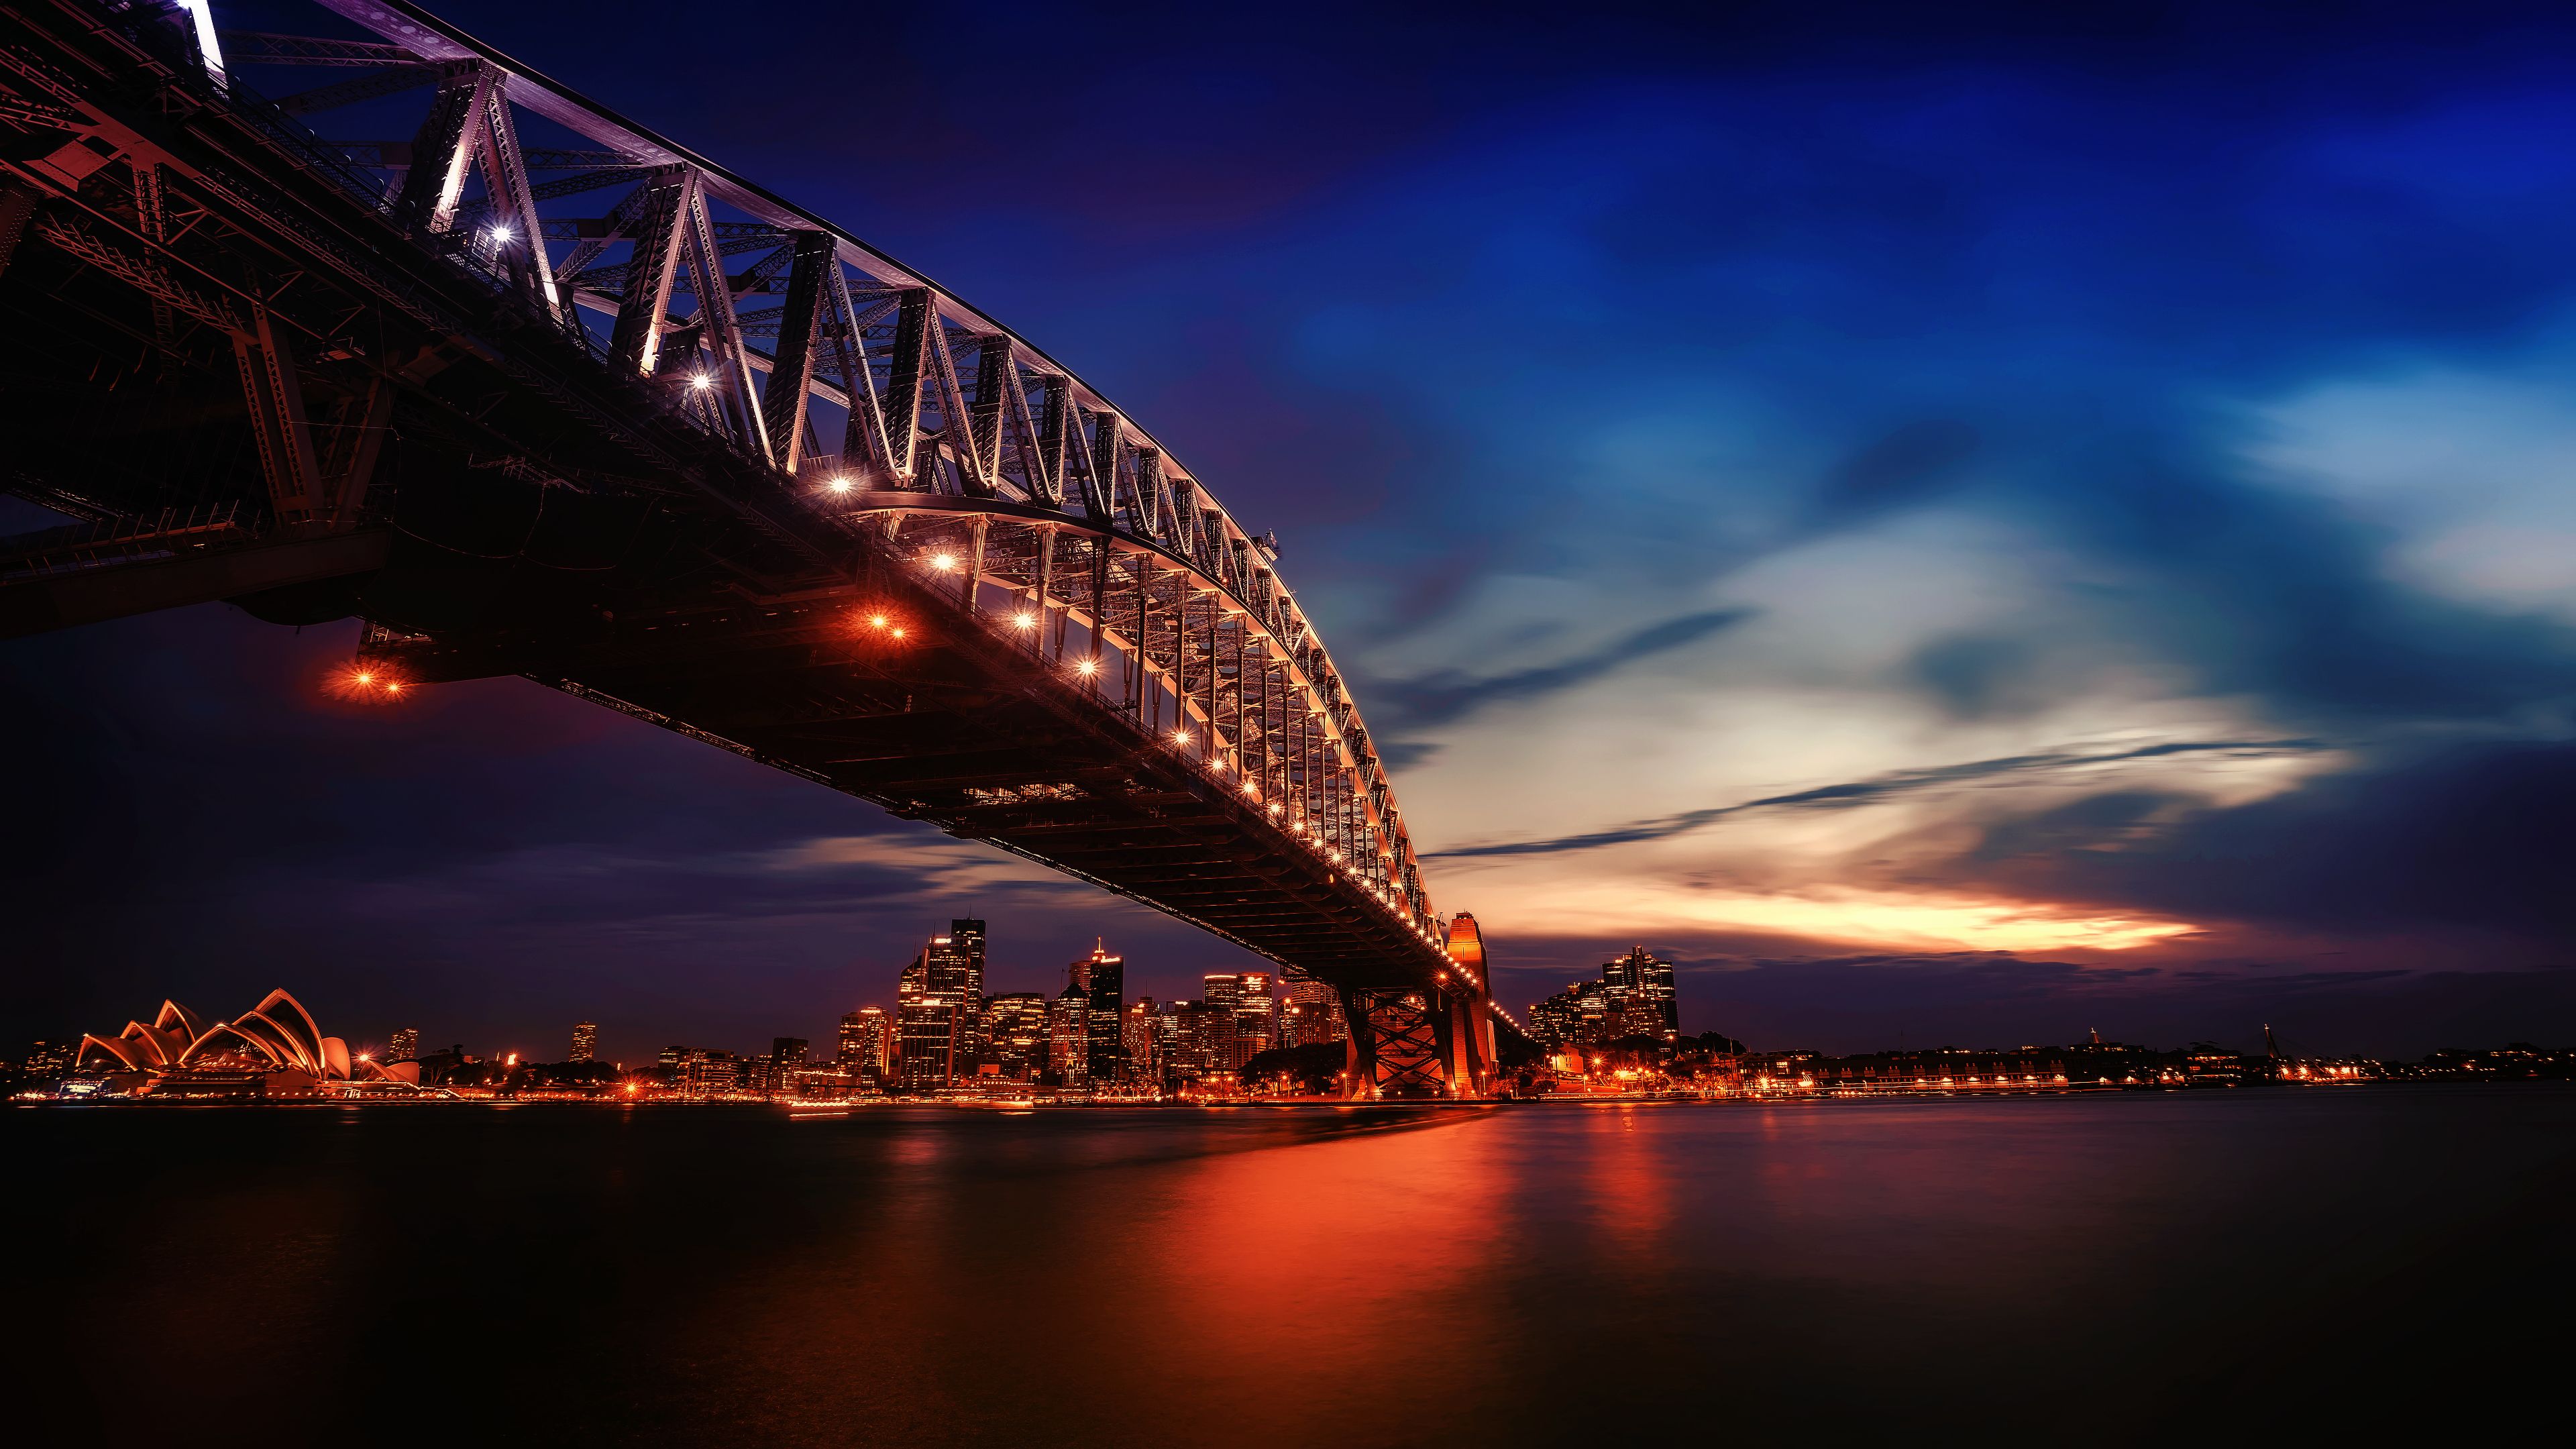 City Lights Sydney Harbour Bridge 4k 2048x1152 Resolution HD 4k Wallpaper, Image, Background, Photo and Picture